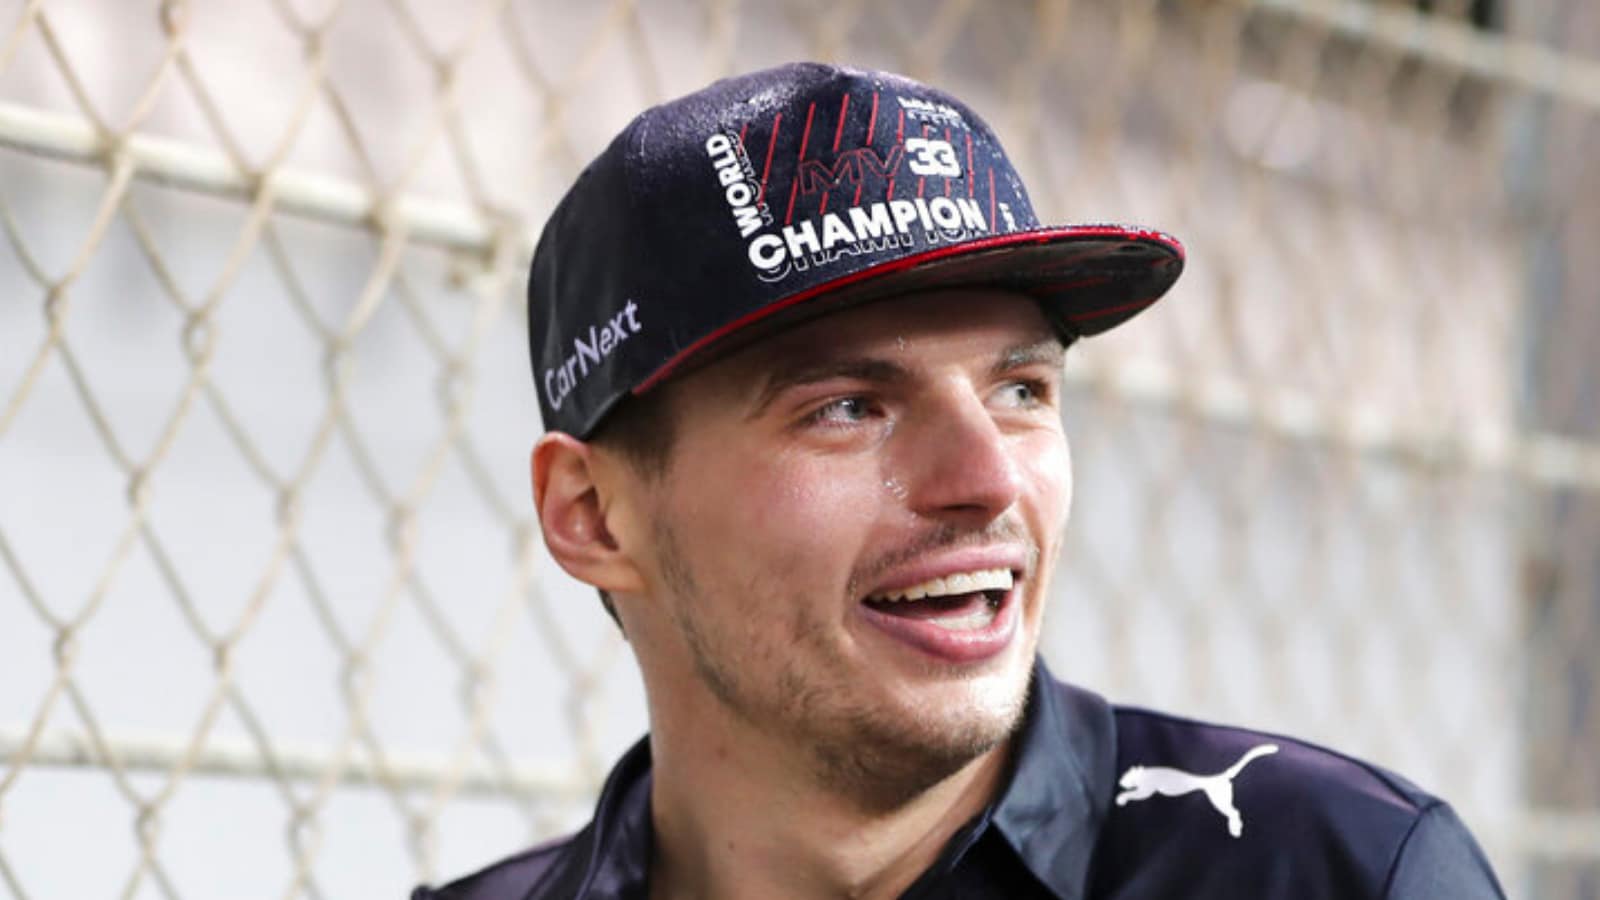 Juara Dunia F1 Max Verstappen akan Berlomba di Virtual Le Mans 24 Jam